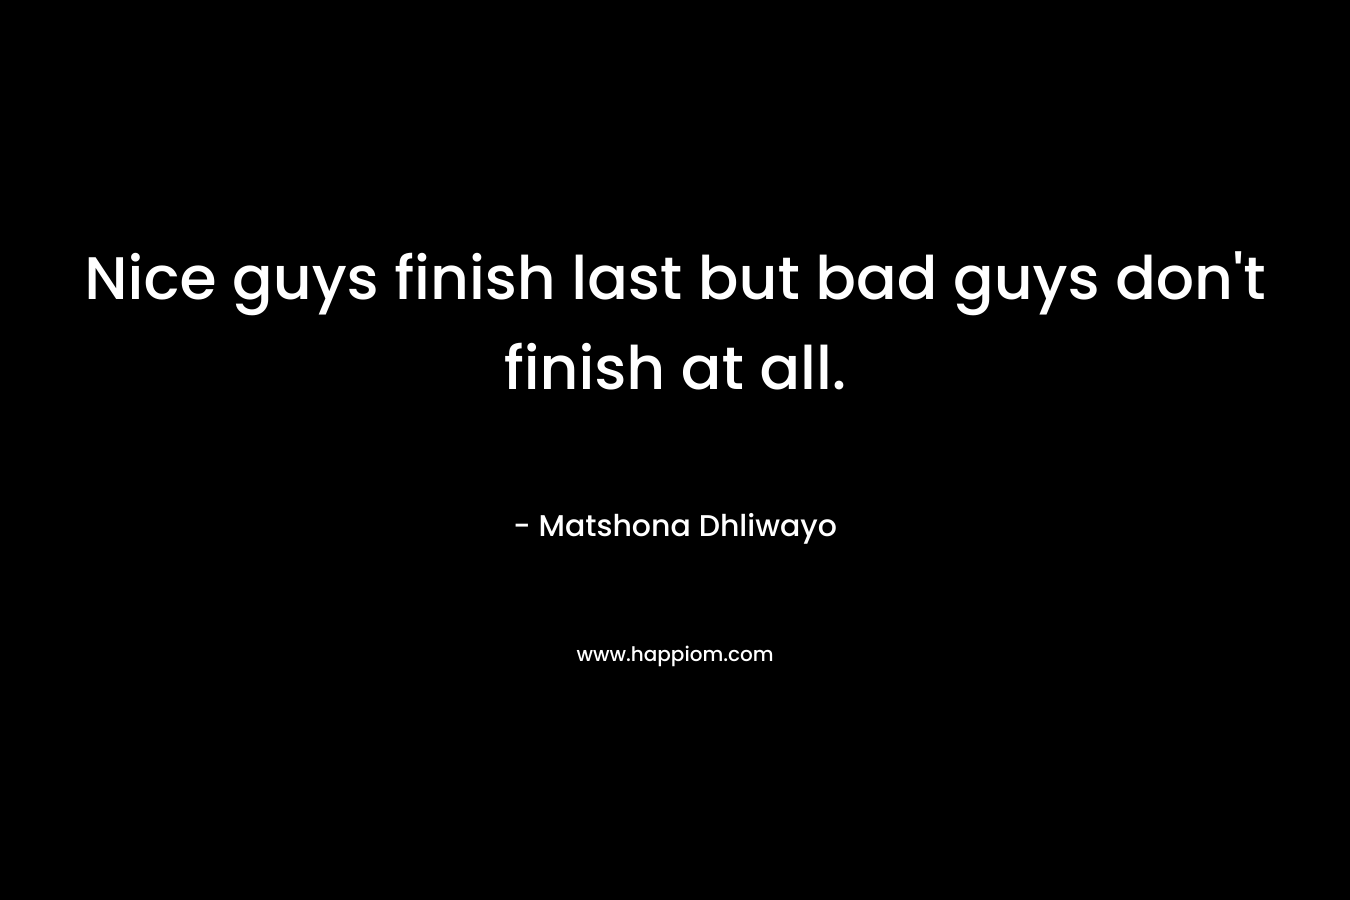 Nice guys finish last but bad guys don't finish at all.